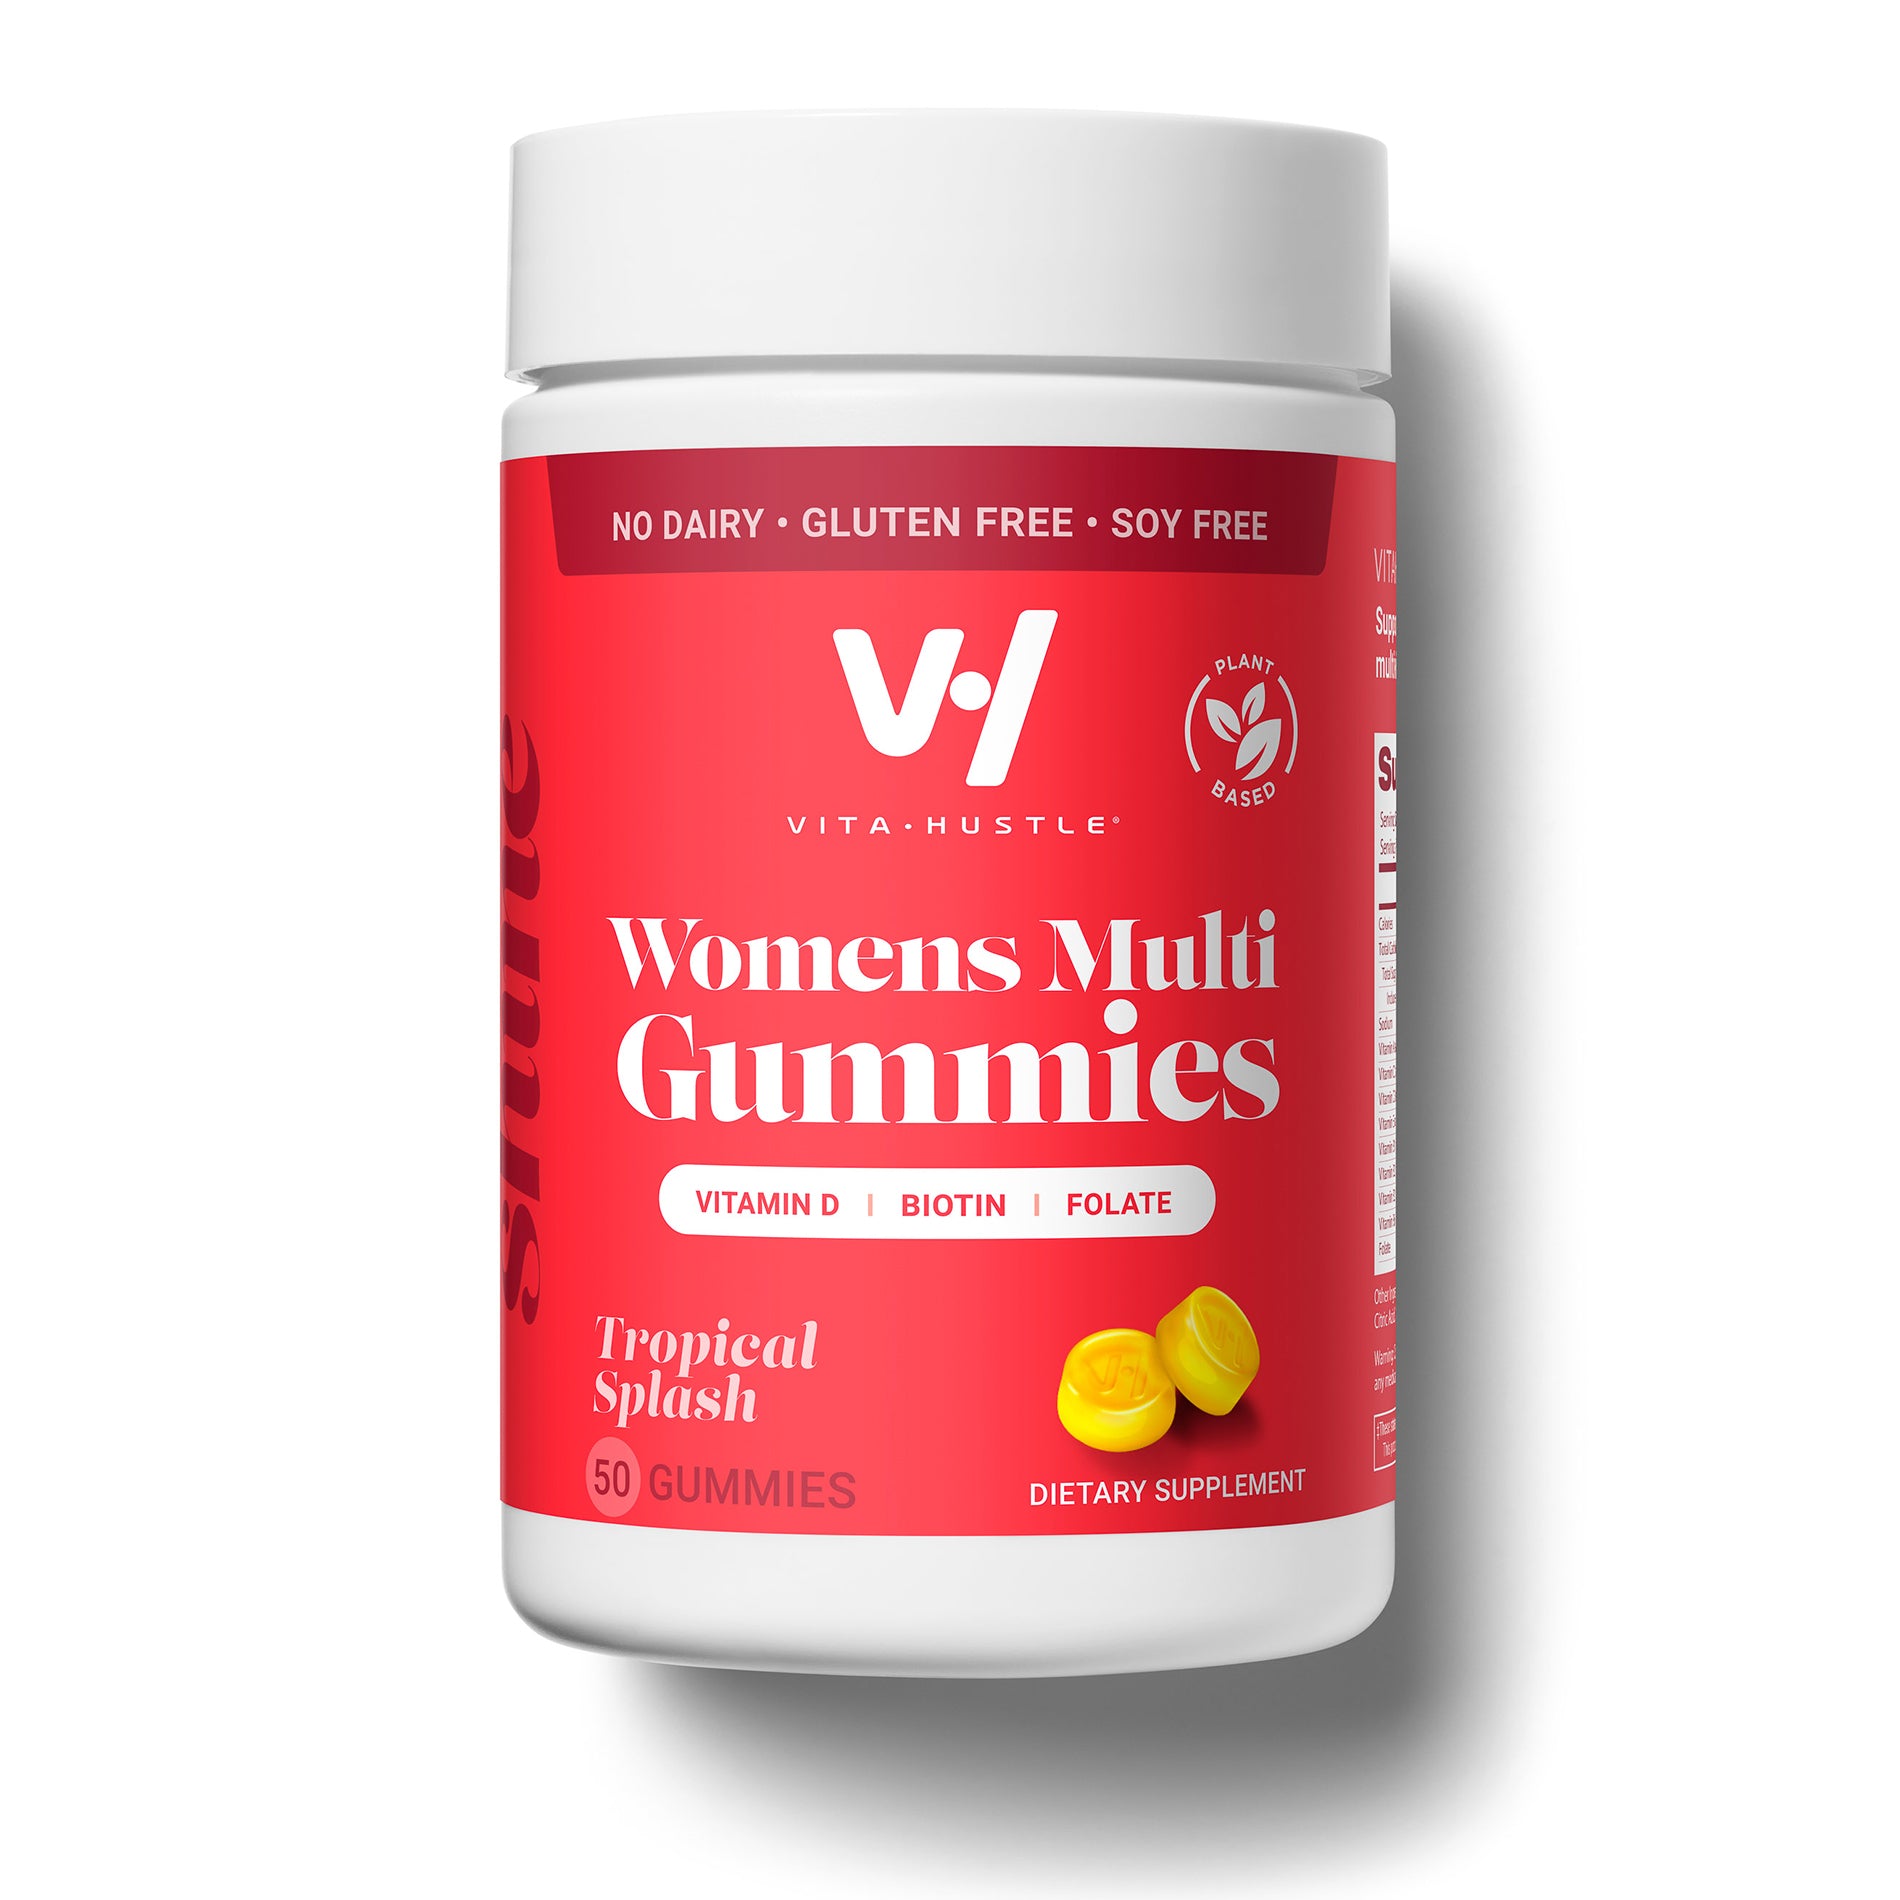 Women's Multi Gummies, Whole Body Support